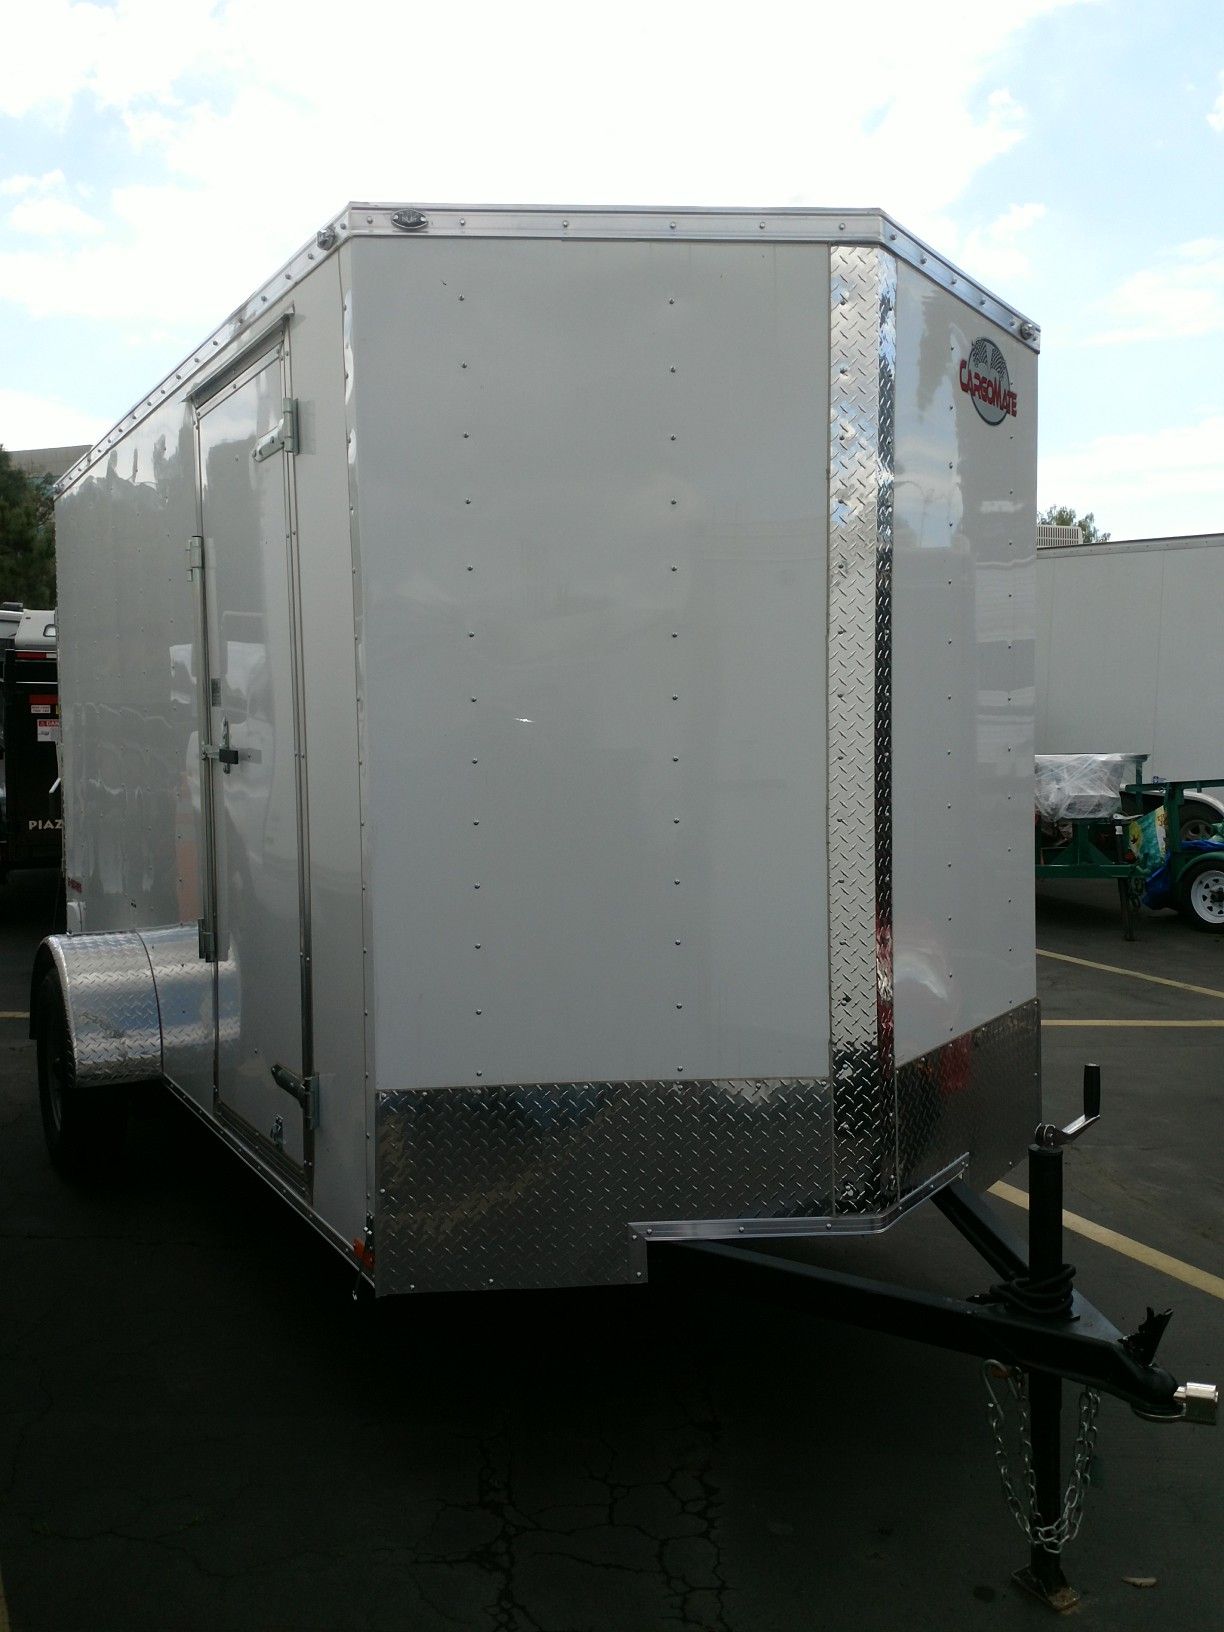 12' enclosed cargo trailer. SALE or RENT. 6' wide x 6' tall door opening. Single axle 2,990# GVWR. Ramp door + side door. Chrome package. LED lights.